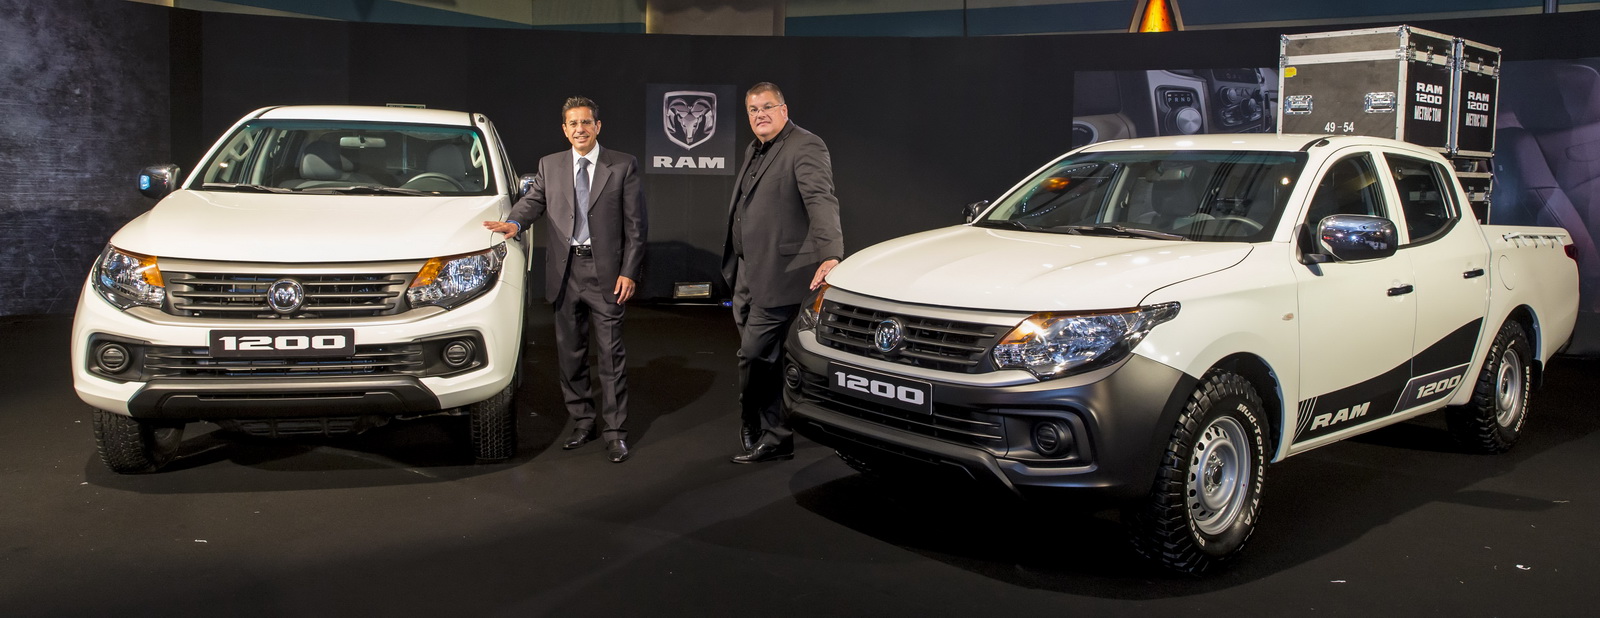 International, ram-1200-pickup: Ram 1200 Pickup, Kembaran Lain Mitsubishi Triton Diperkenalkan